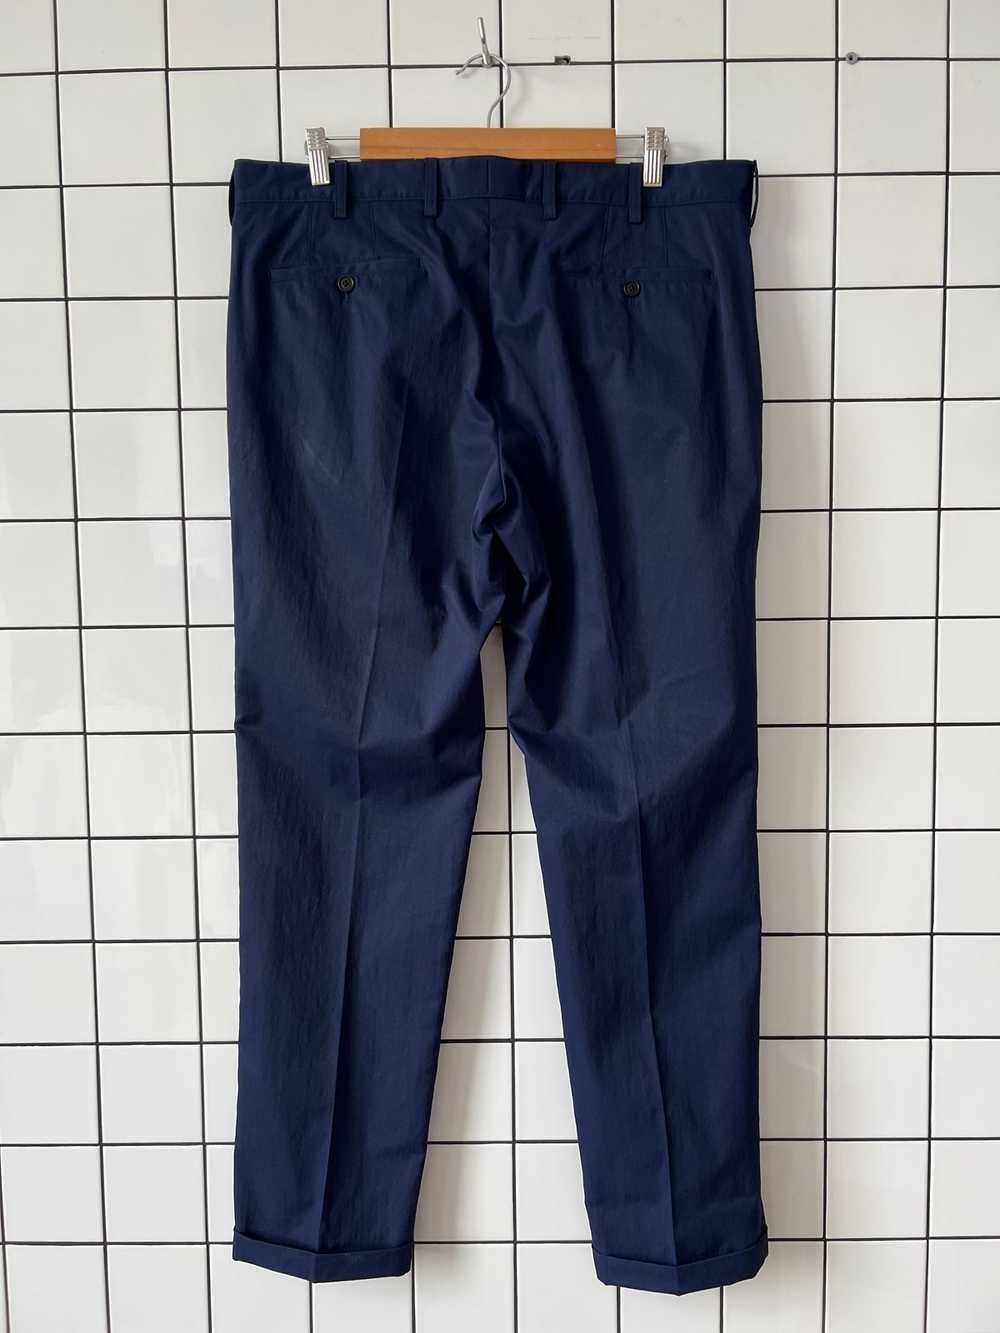 Prada PRADA Pants Suit Trousers Navy Blue red tab… - image 6